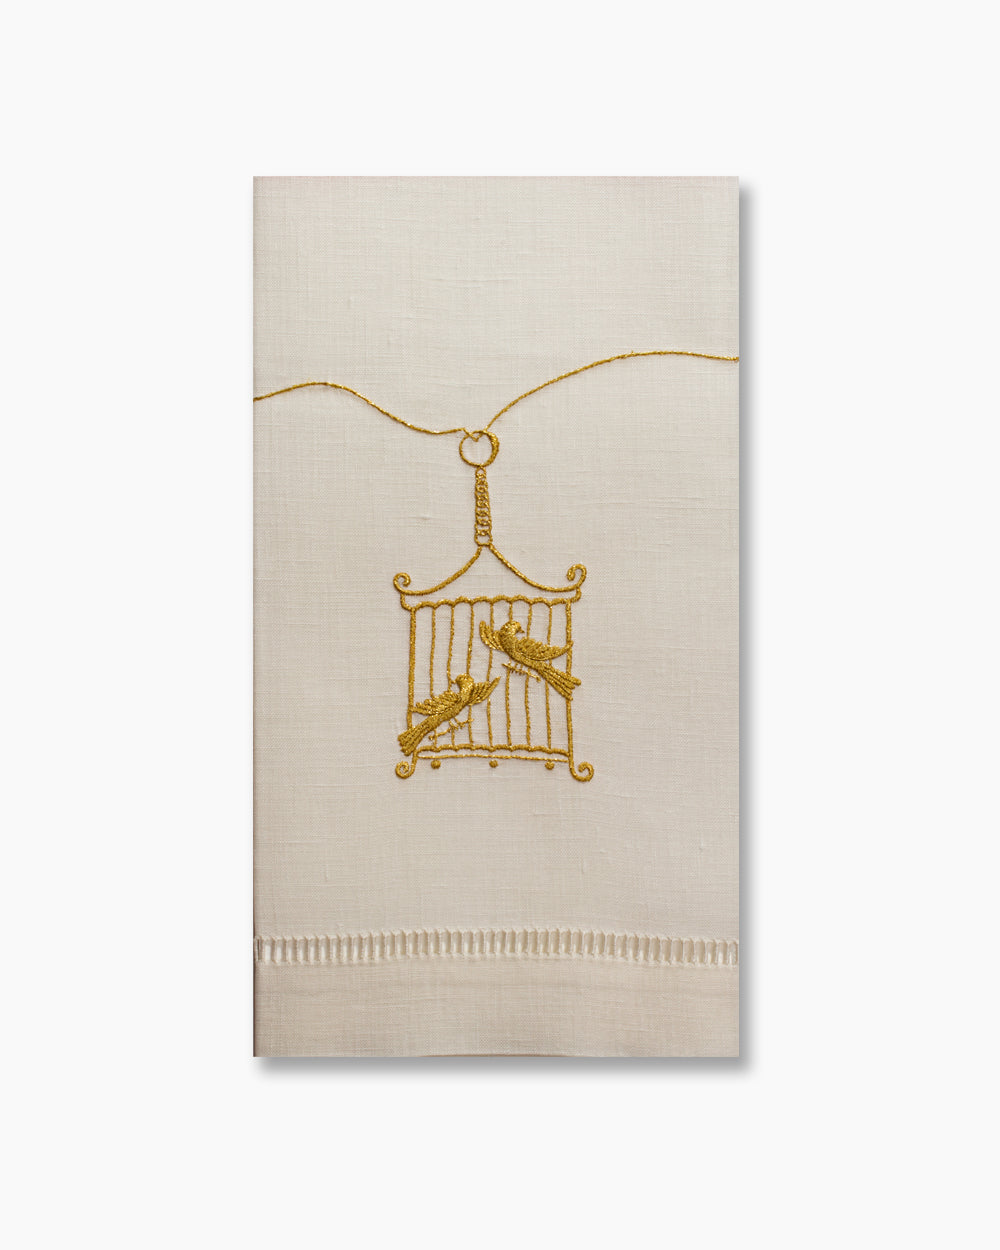 Birdcage Gold Hand Towel